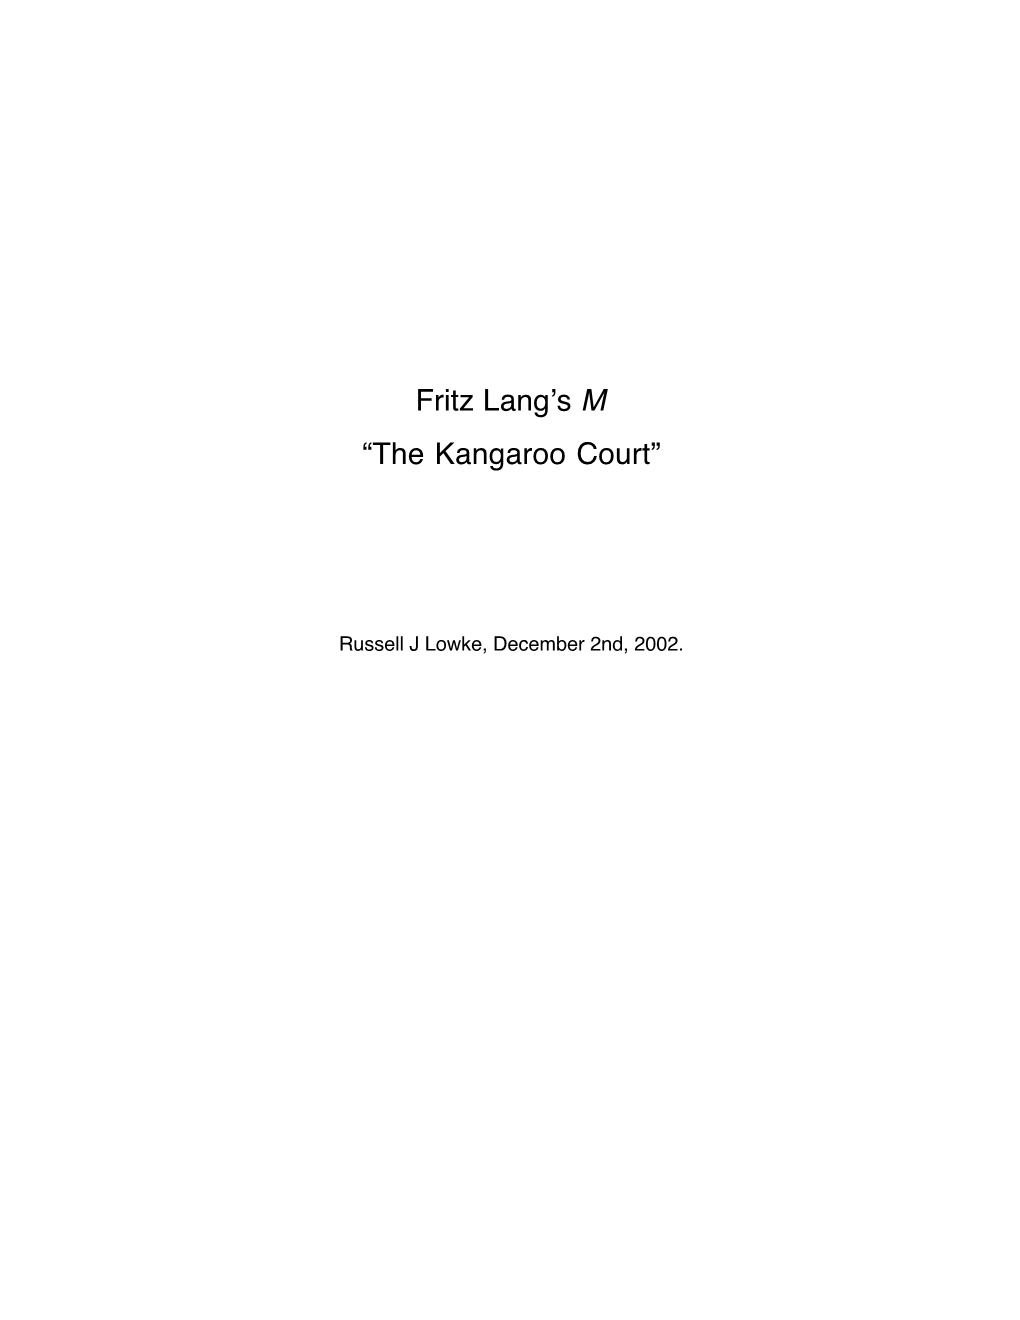 The Kangaroo Court”